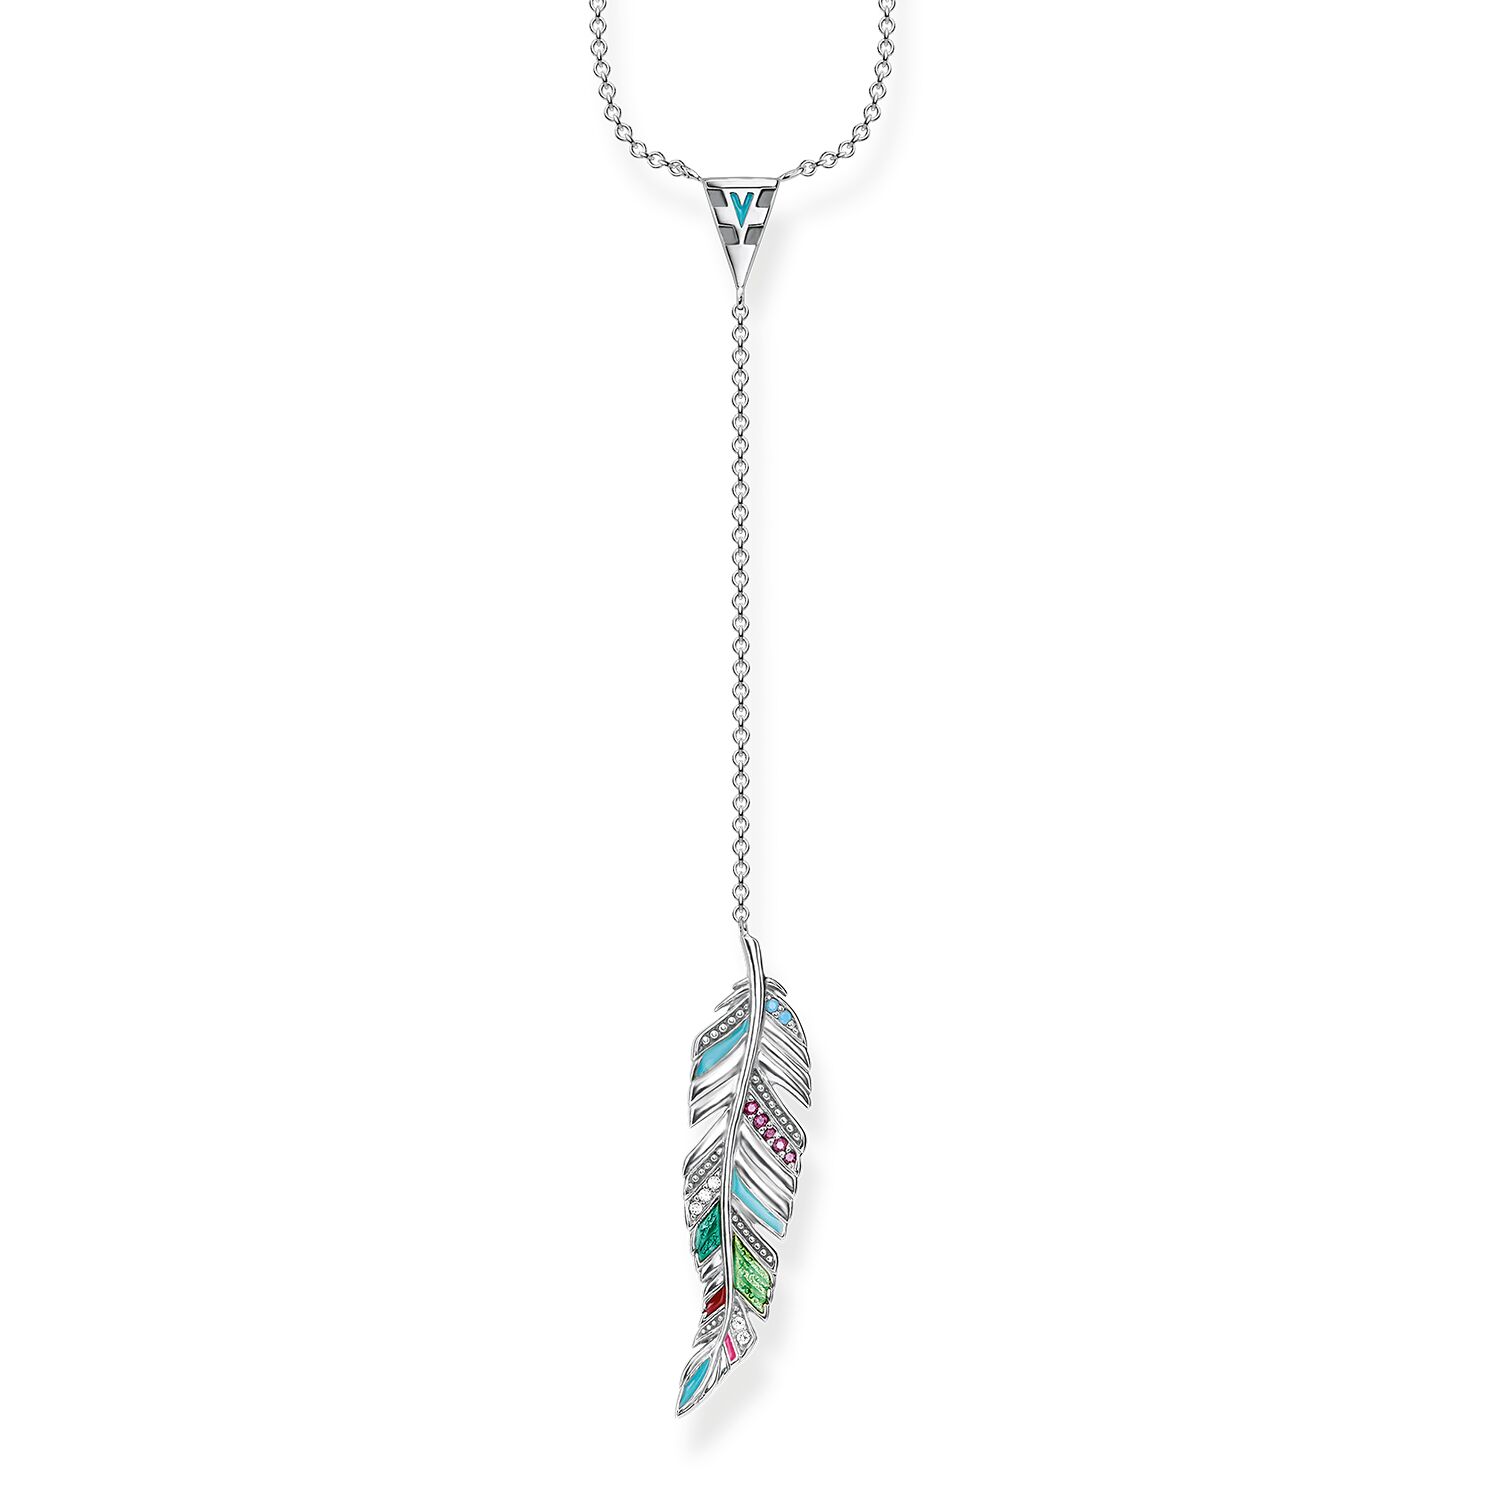 Wholesale Custom necklace made in 925 Sterling silver OEM/ODM Jewelry, blackened, cold enamel OEM